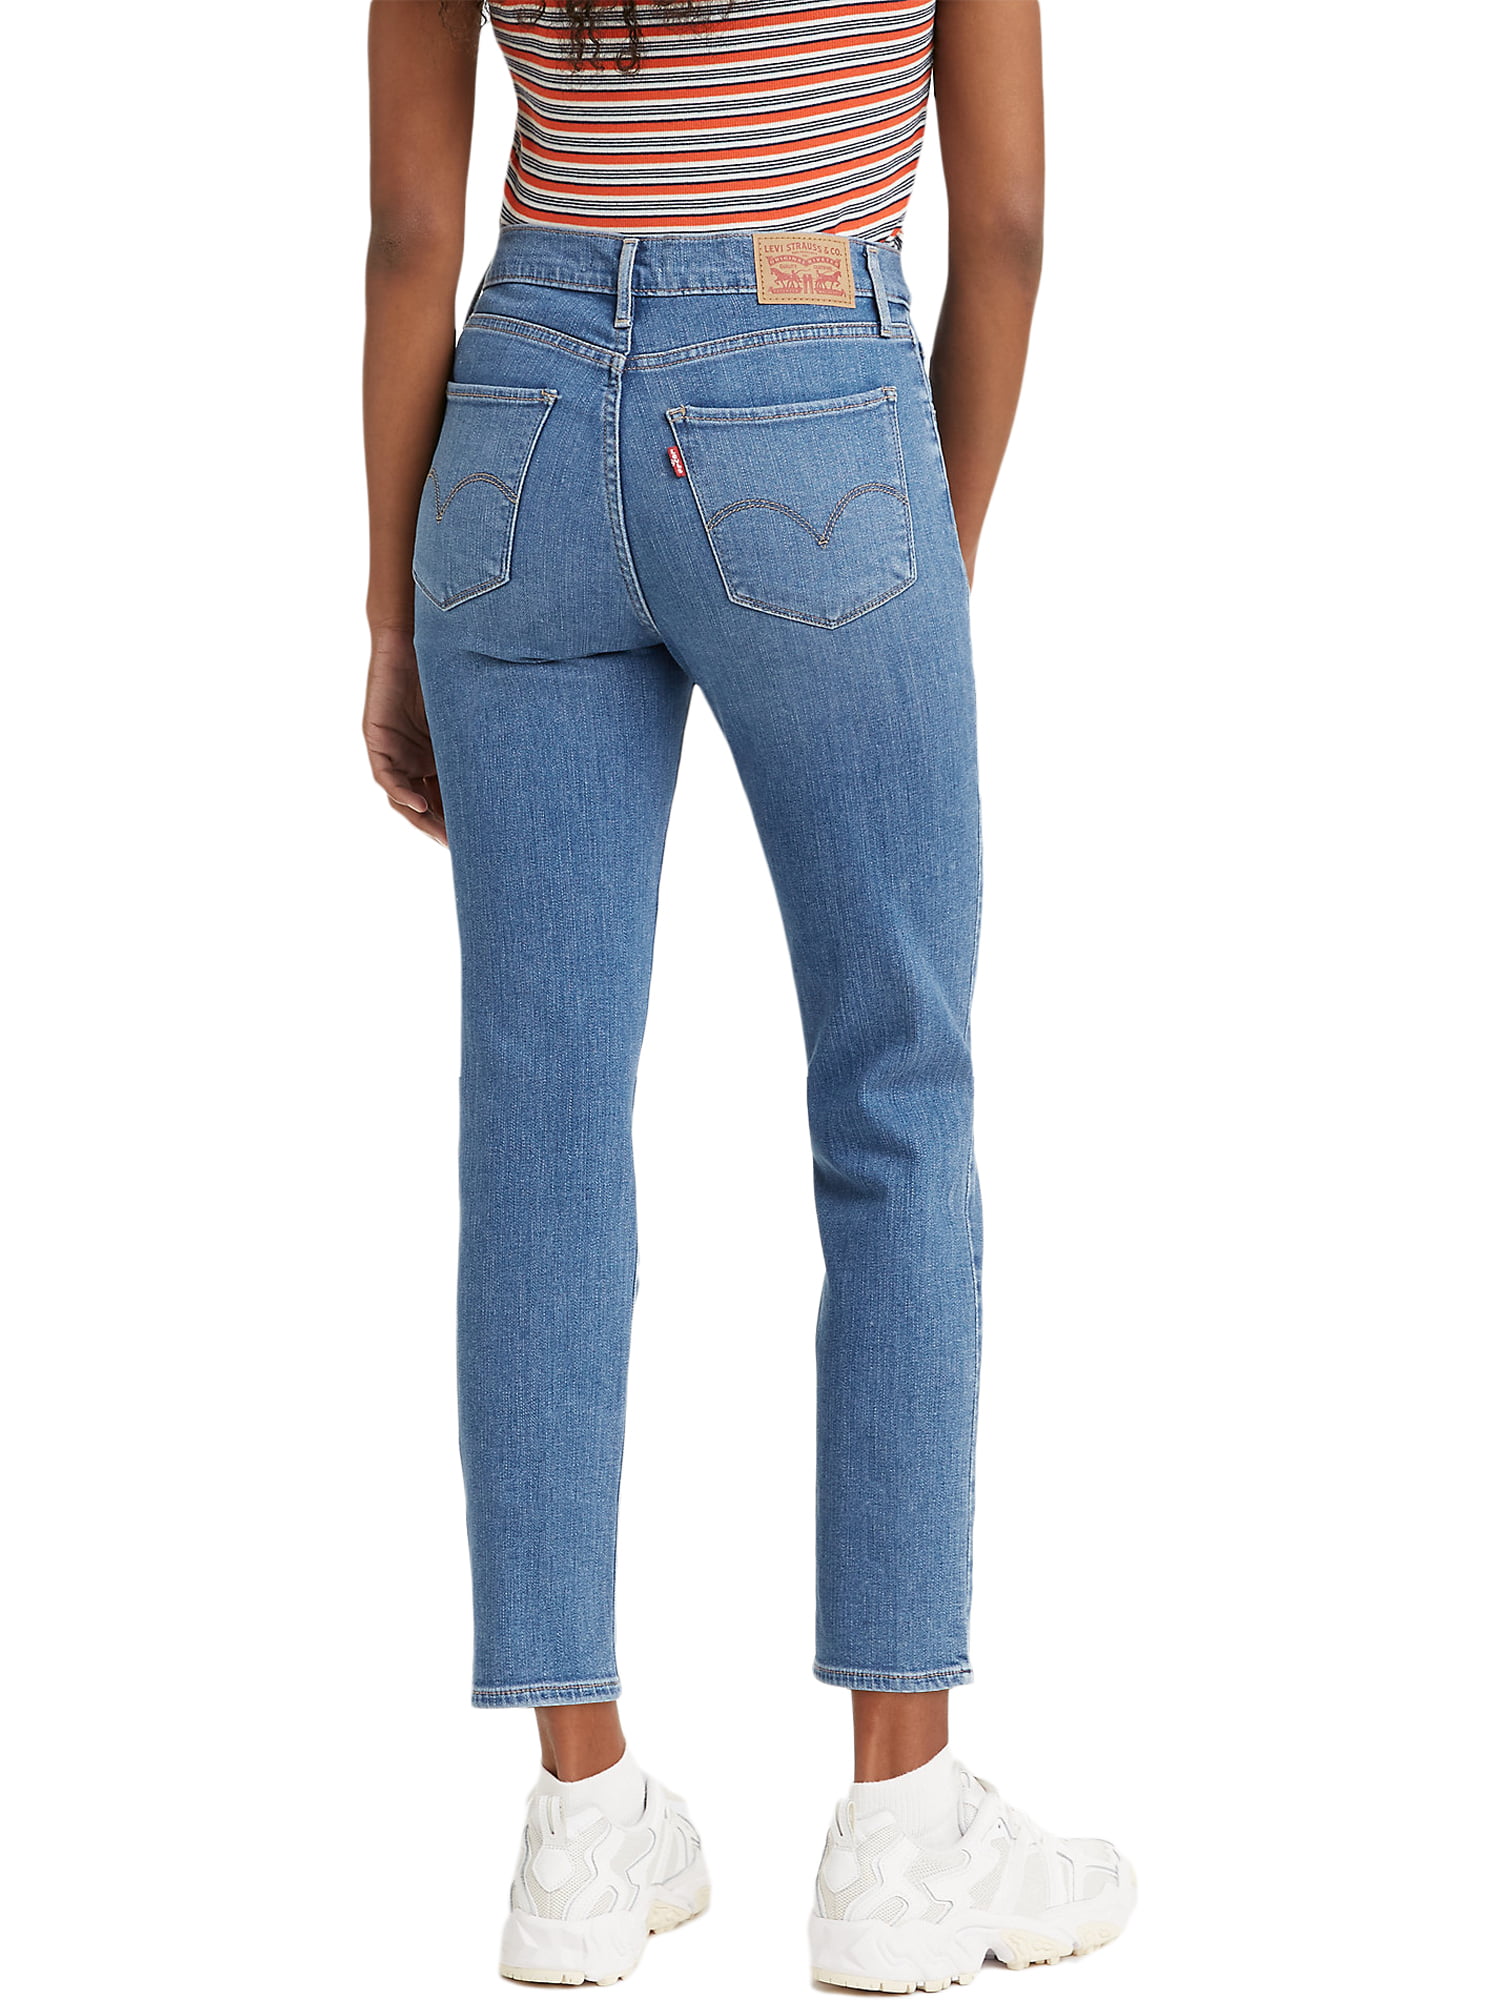 Levi's Original Red Tab Women's 724 High-Rise Straight Crop Jeans -  Walmart.com